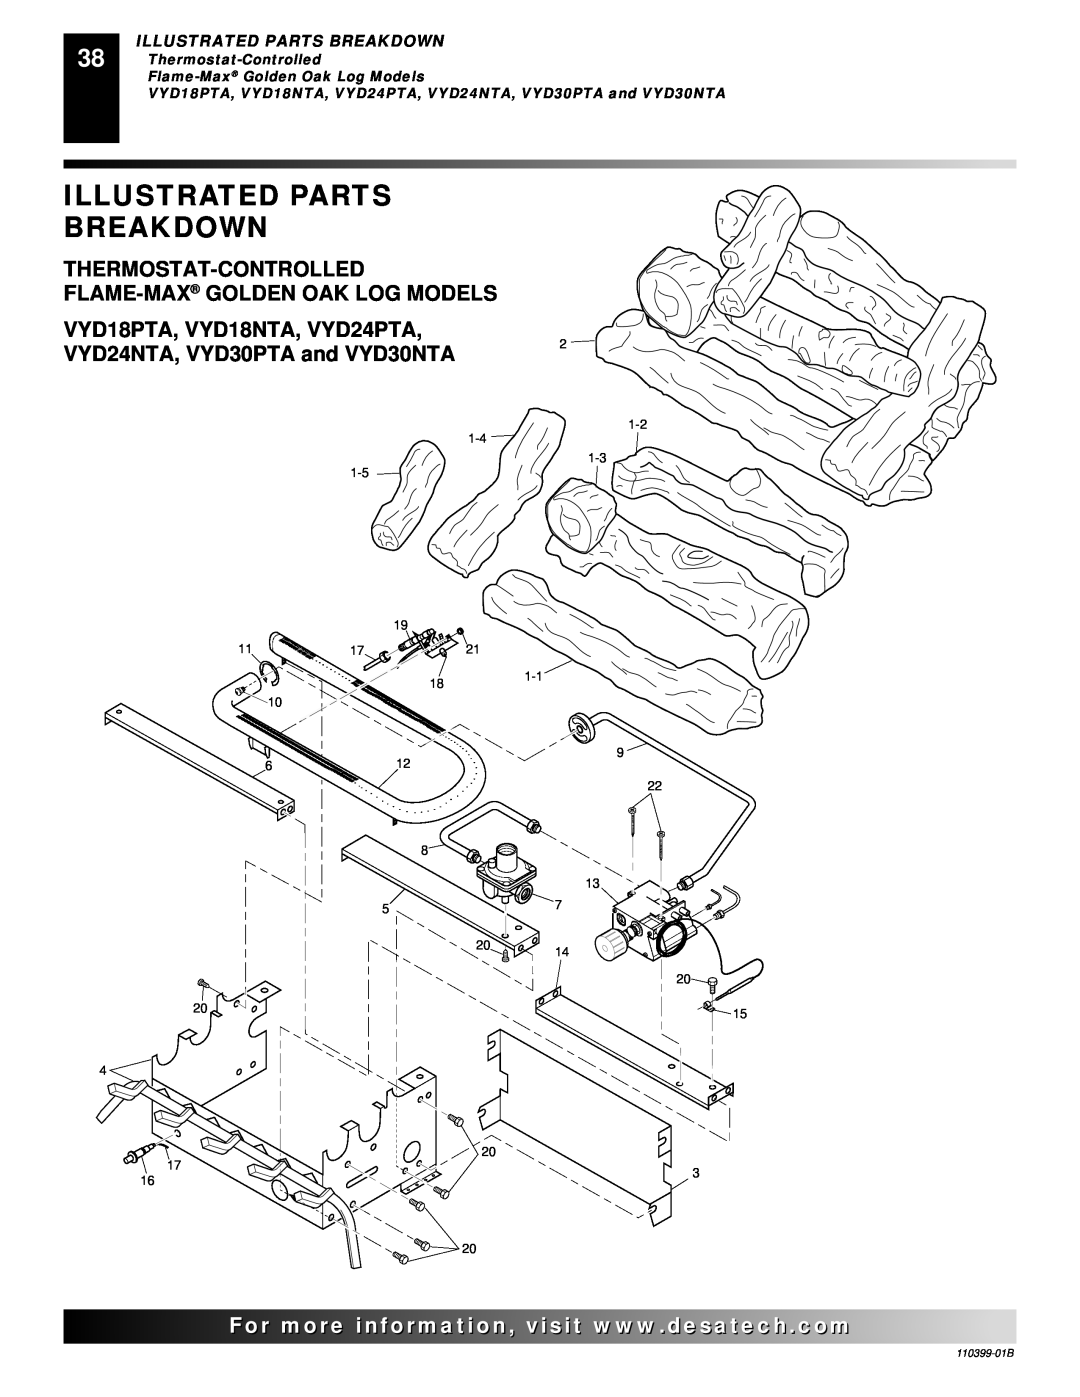 Desa FLAME-MAX VintageOak Illustrated Parts Breakdown, Thermostat-Controlled, Flame-Max Golden Oak Log Models 